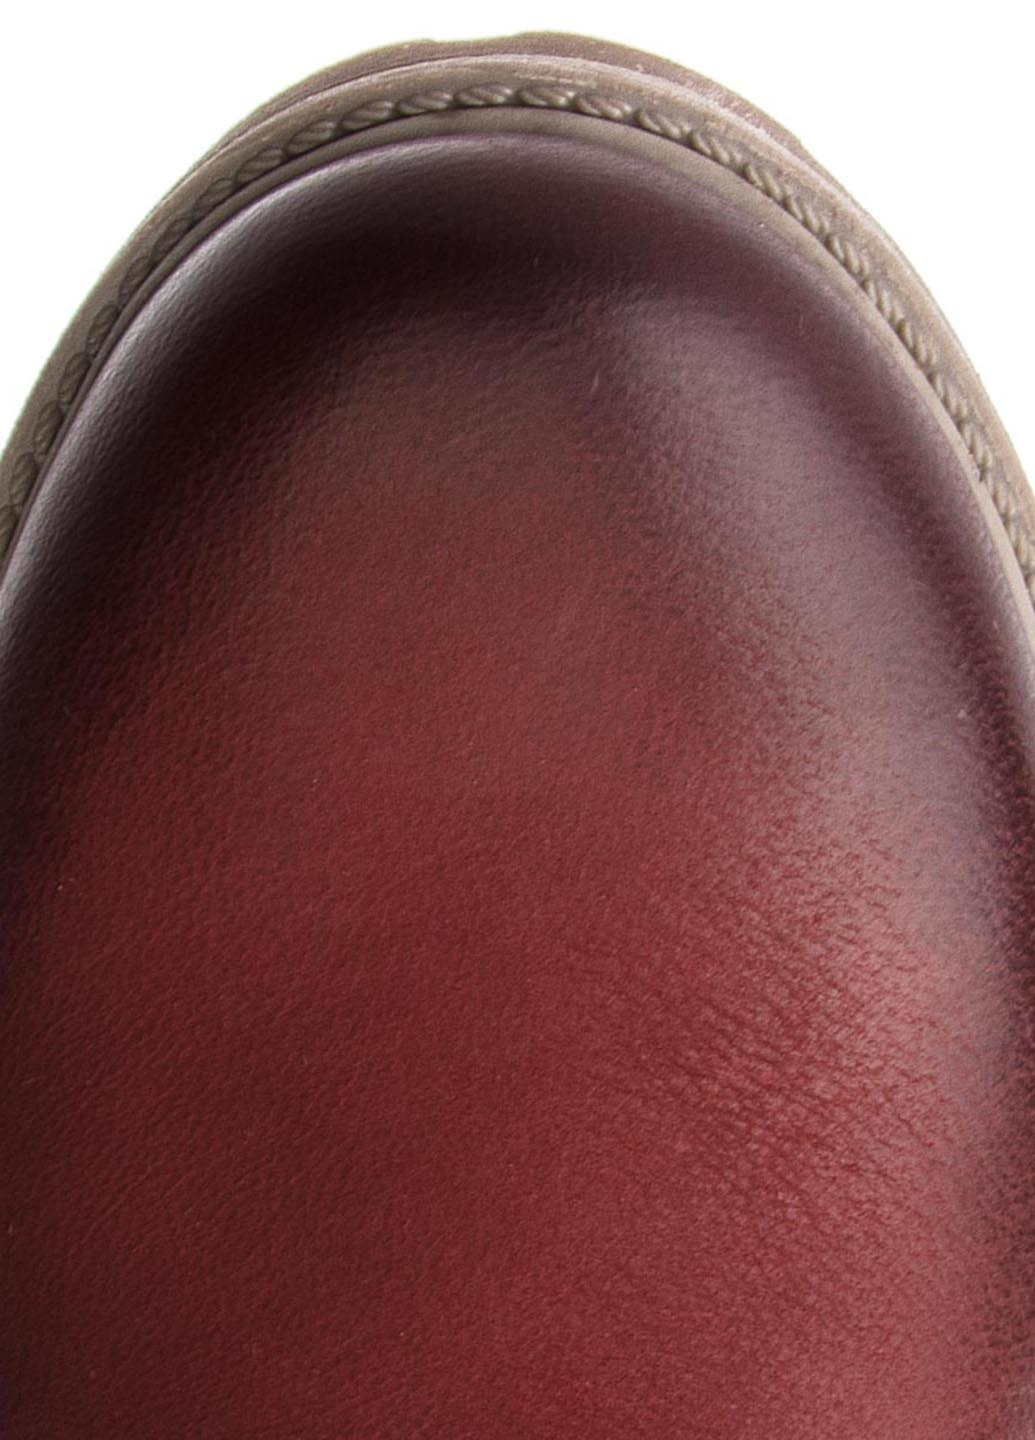 Зимние черевики wi20-aspen-02 тимберленды Lasocki с логотипом